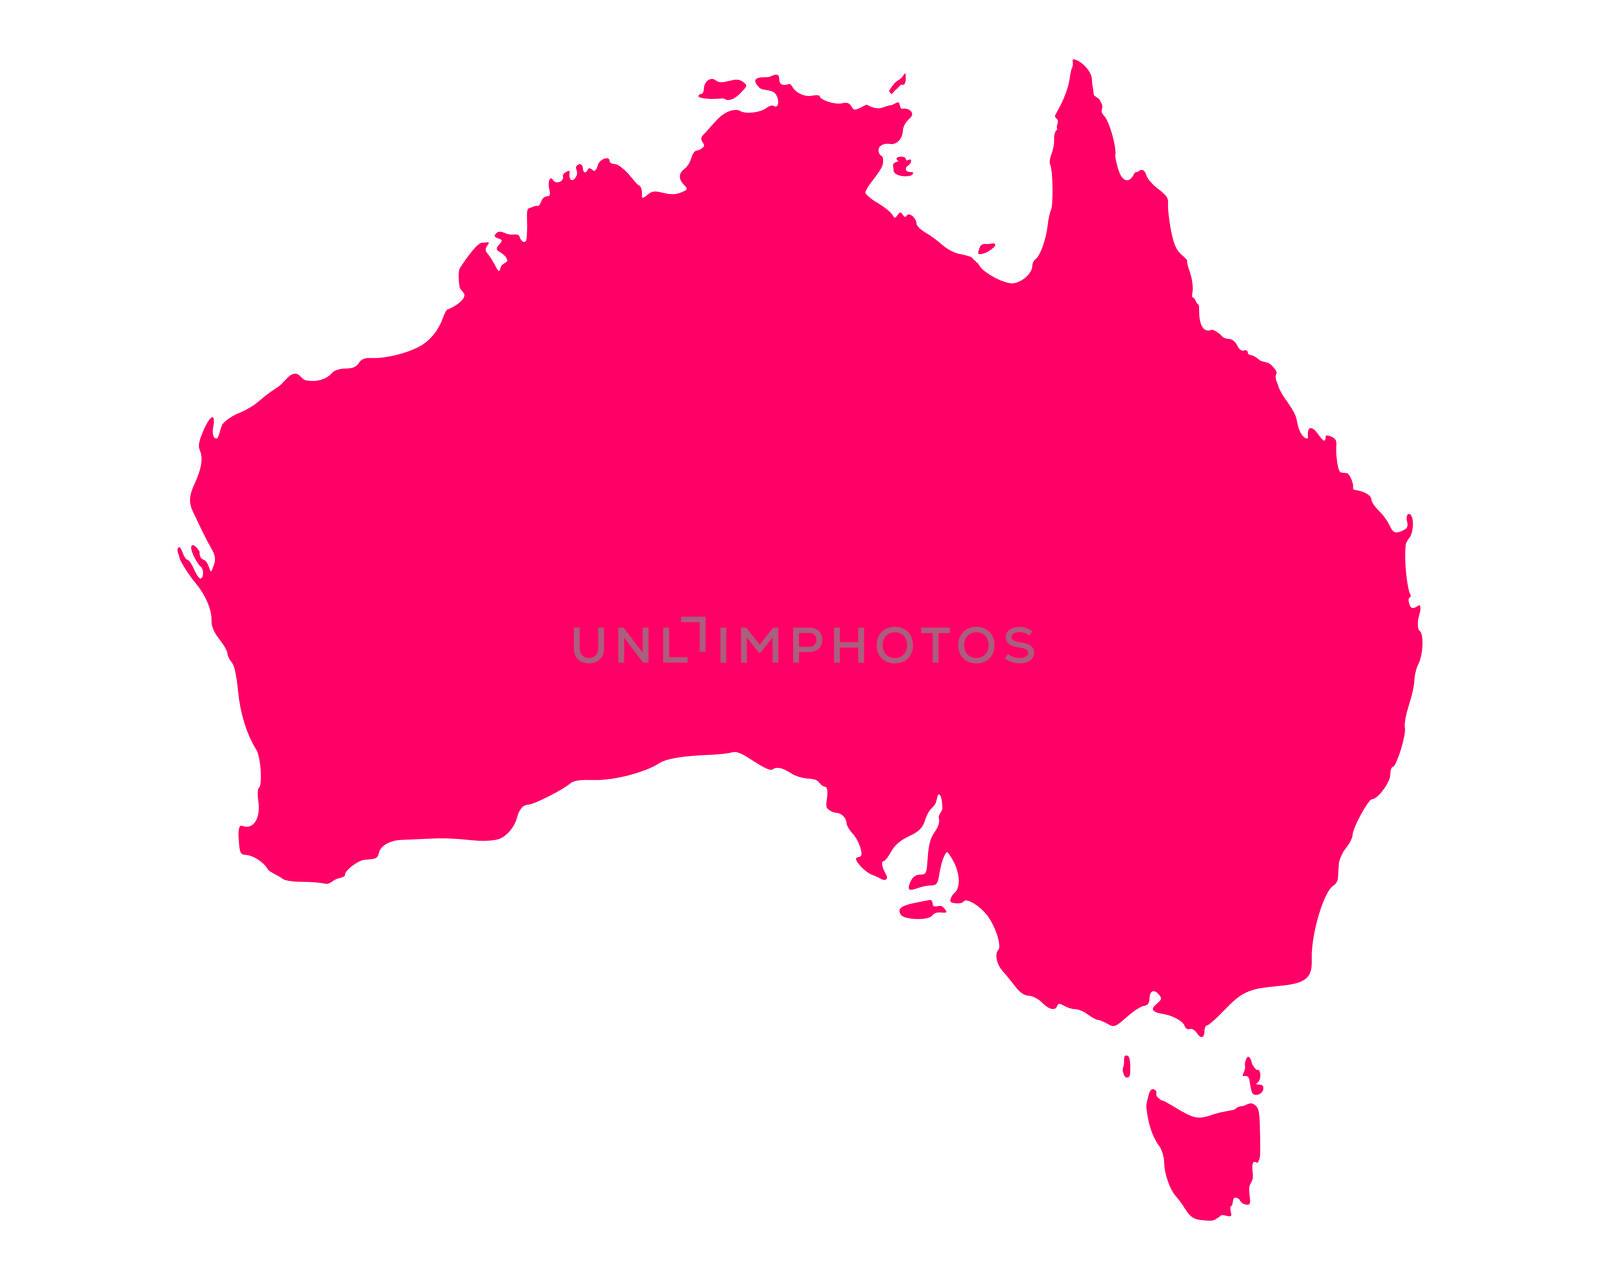 Map of Australia by rbiedermann